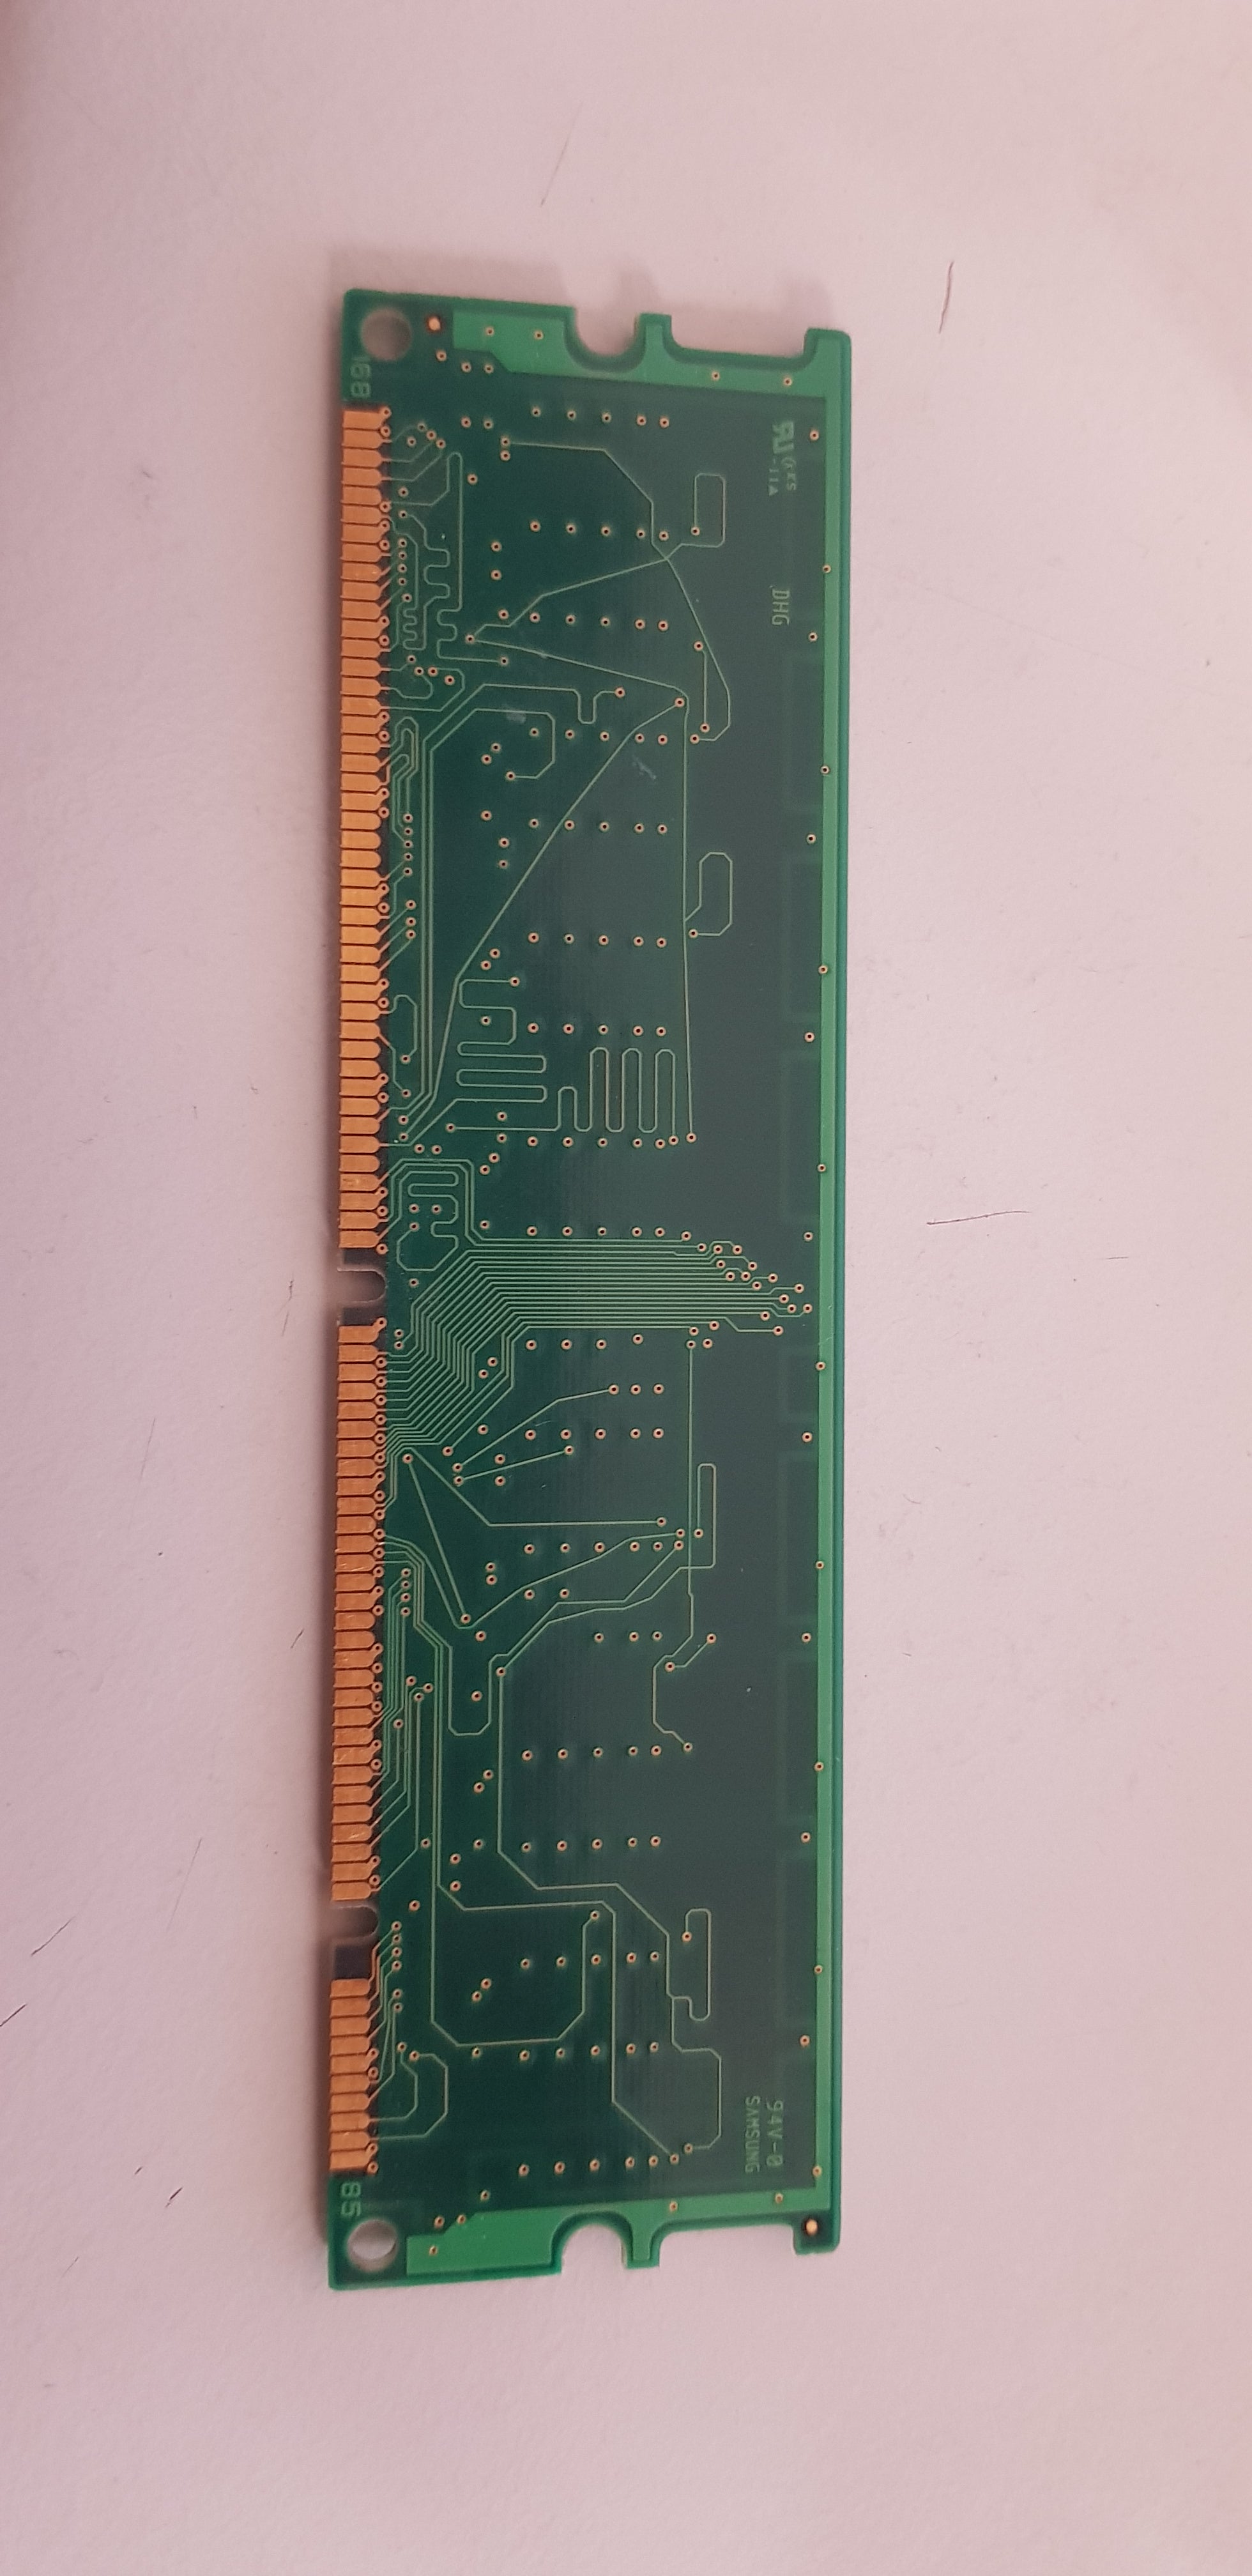 Samsung 64MB PC-100 Non ECC 100Mhz 168Pin Desktop SDR SDRAM DIMM Memory (M366S0823DTS-C1H)